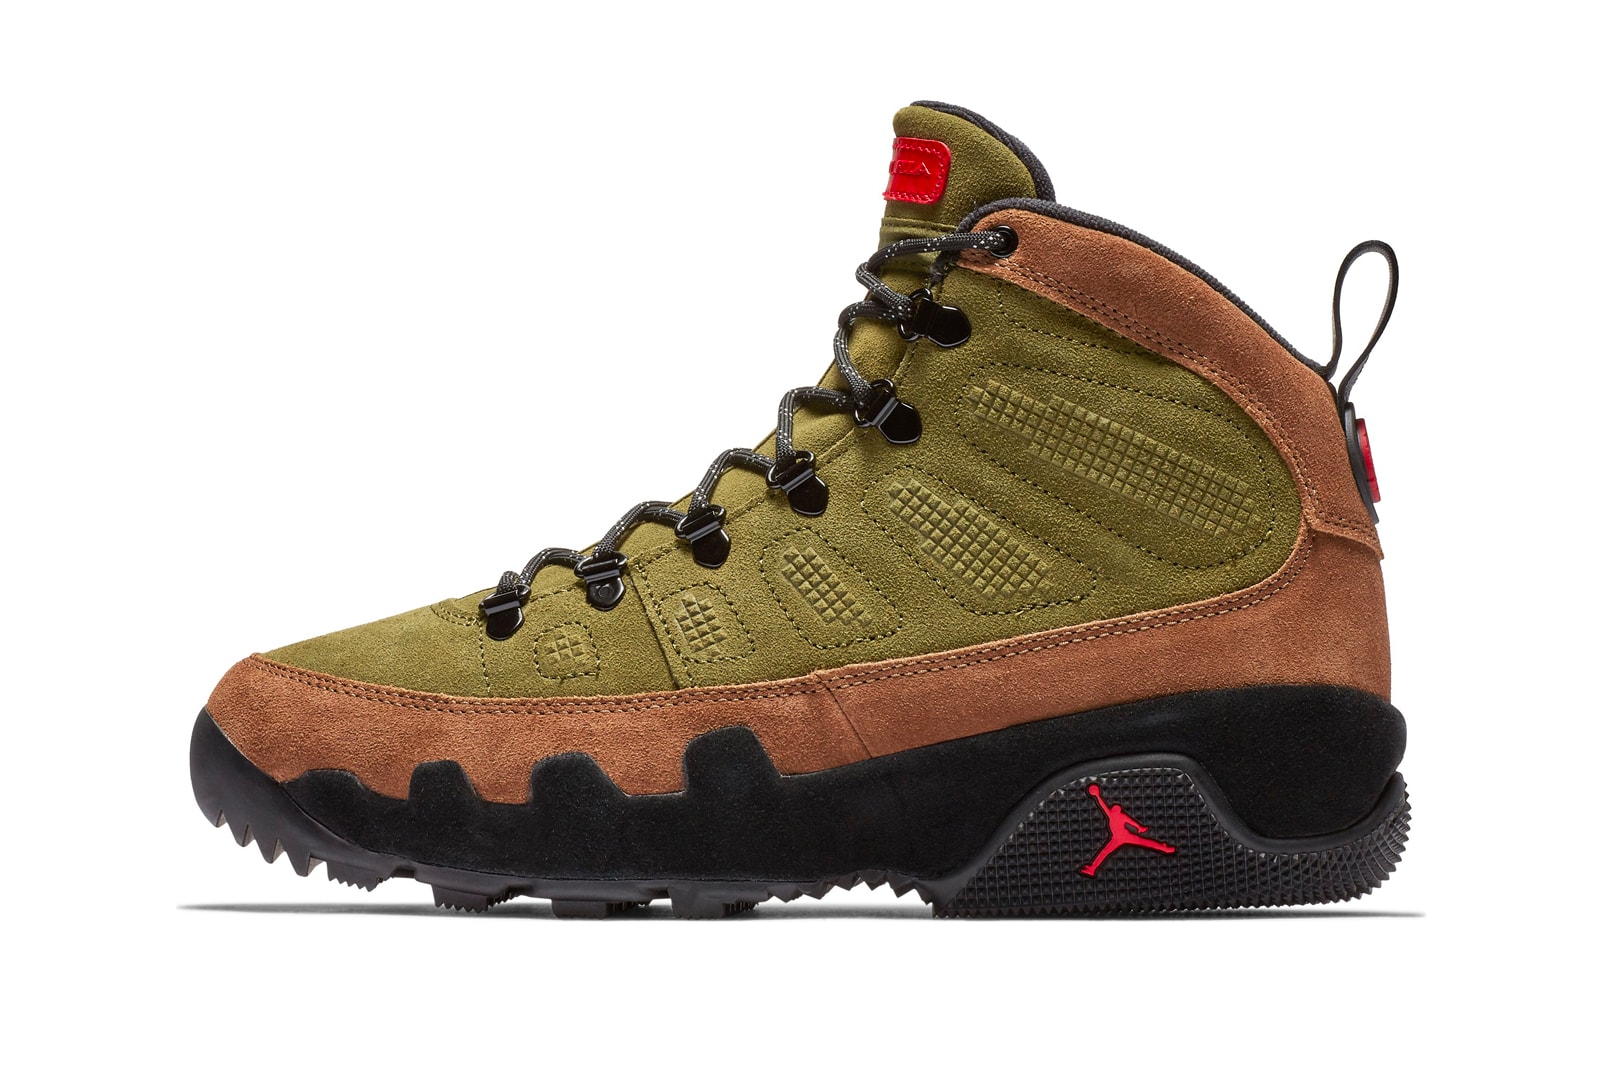 Air Jordan 9 Retro Boot NRG "Beef and Broccoli" Release Date sneaker brown olive colorway price info purchase online october 2018 jordan brand